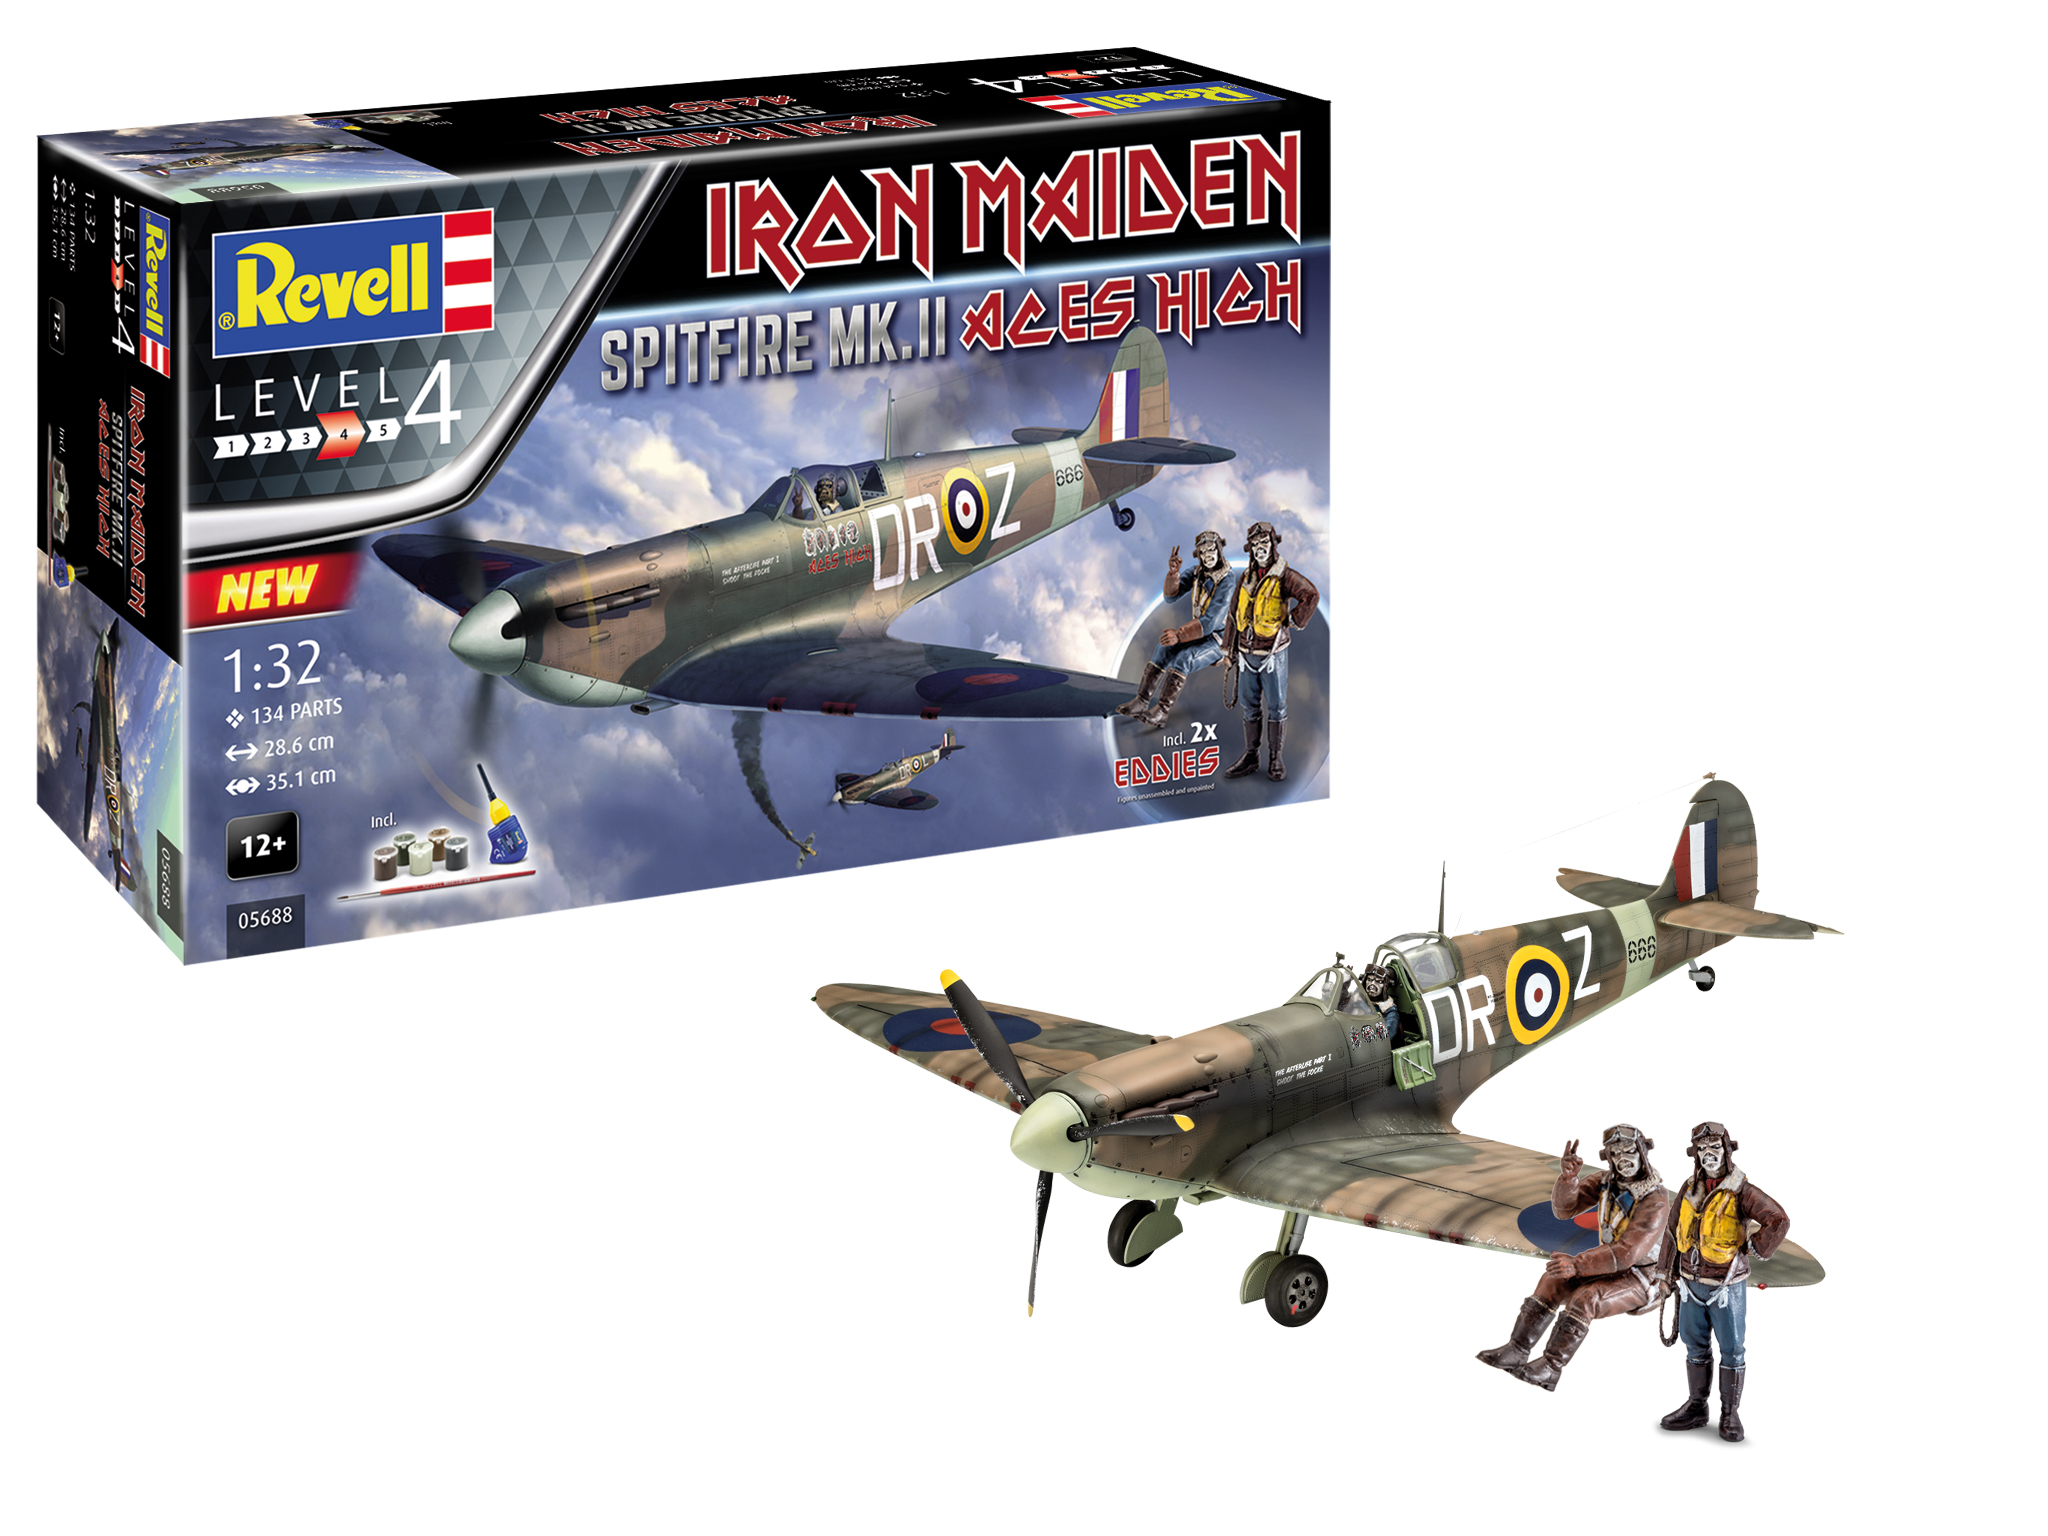 Revell Model Set Spitfire Mk.II "Aces High" Iron Maiden 1:32 bouwpakket met lijm en verf